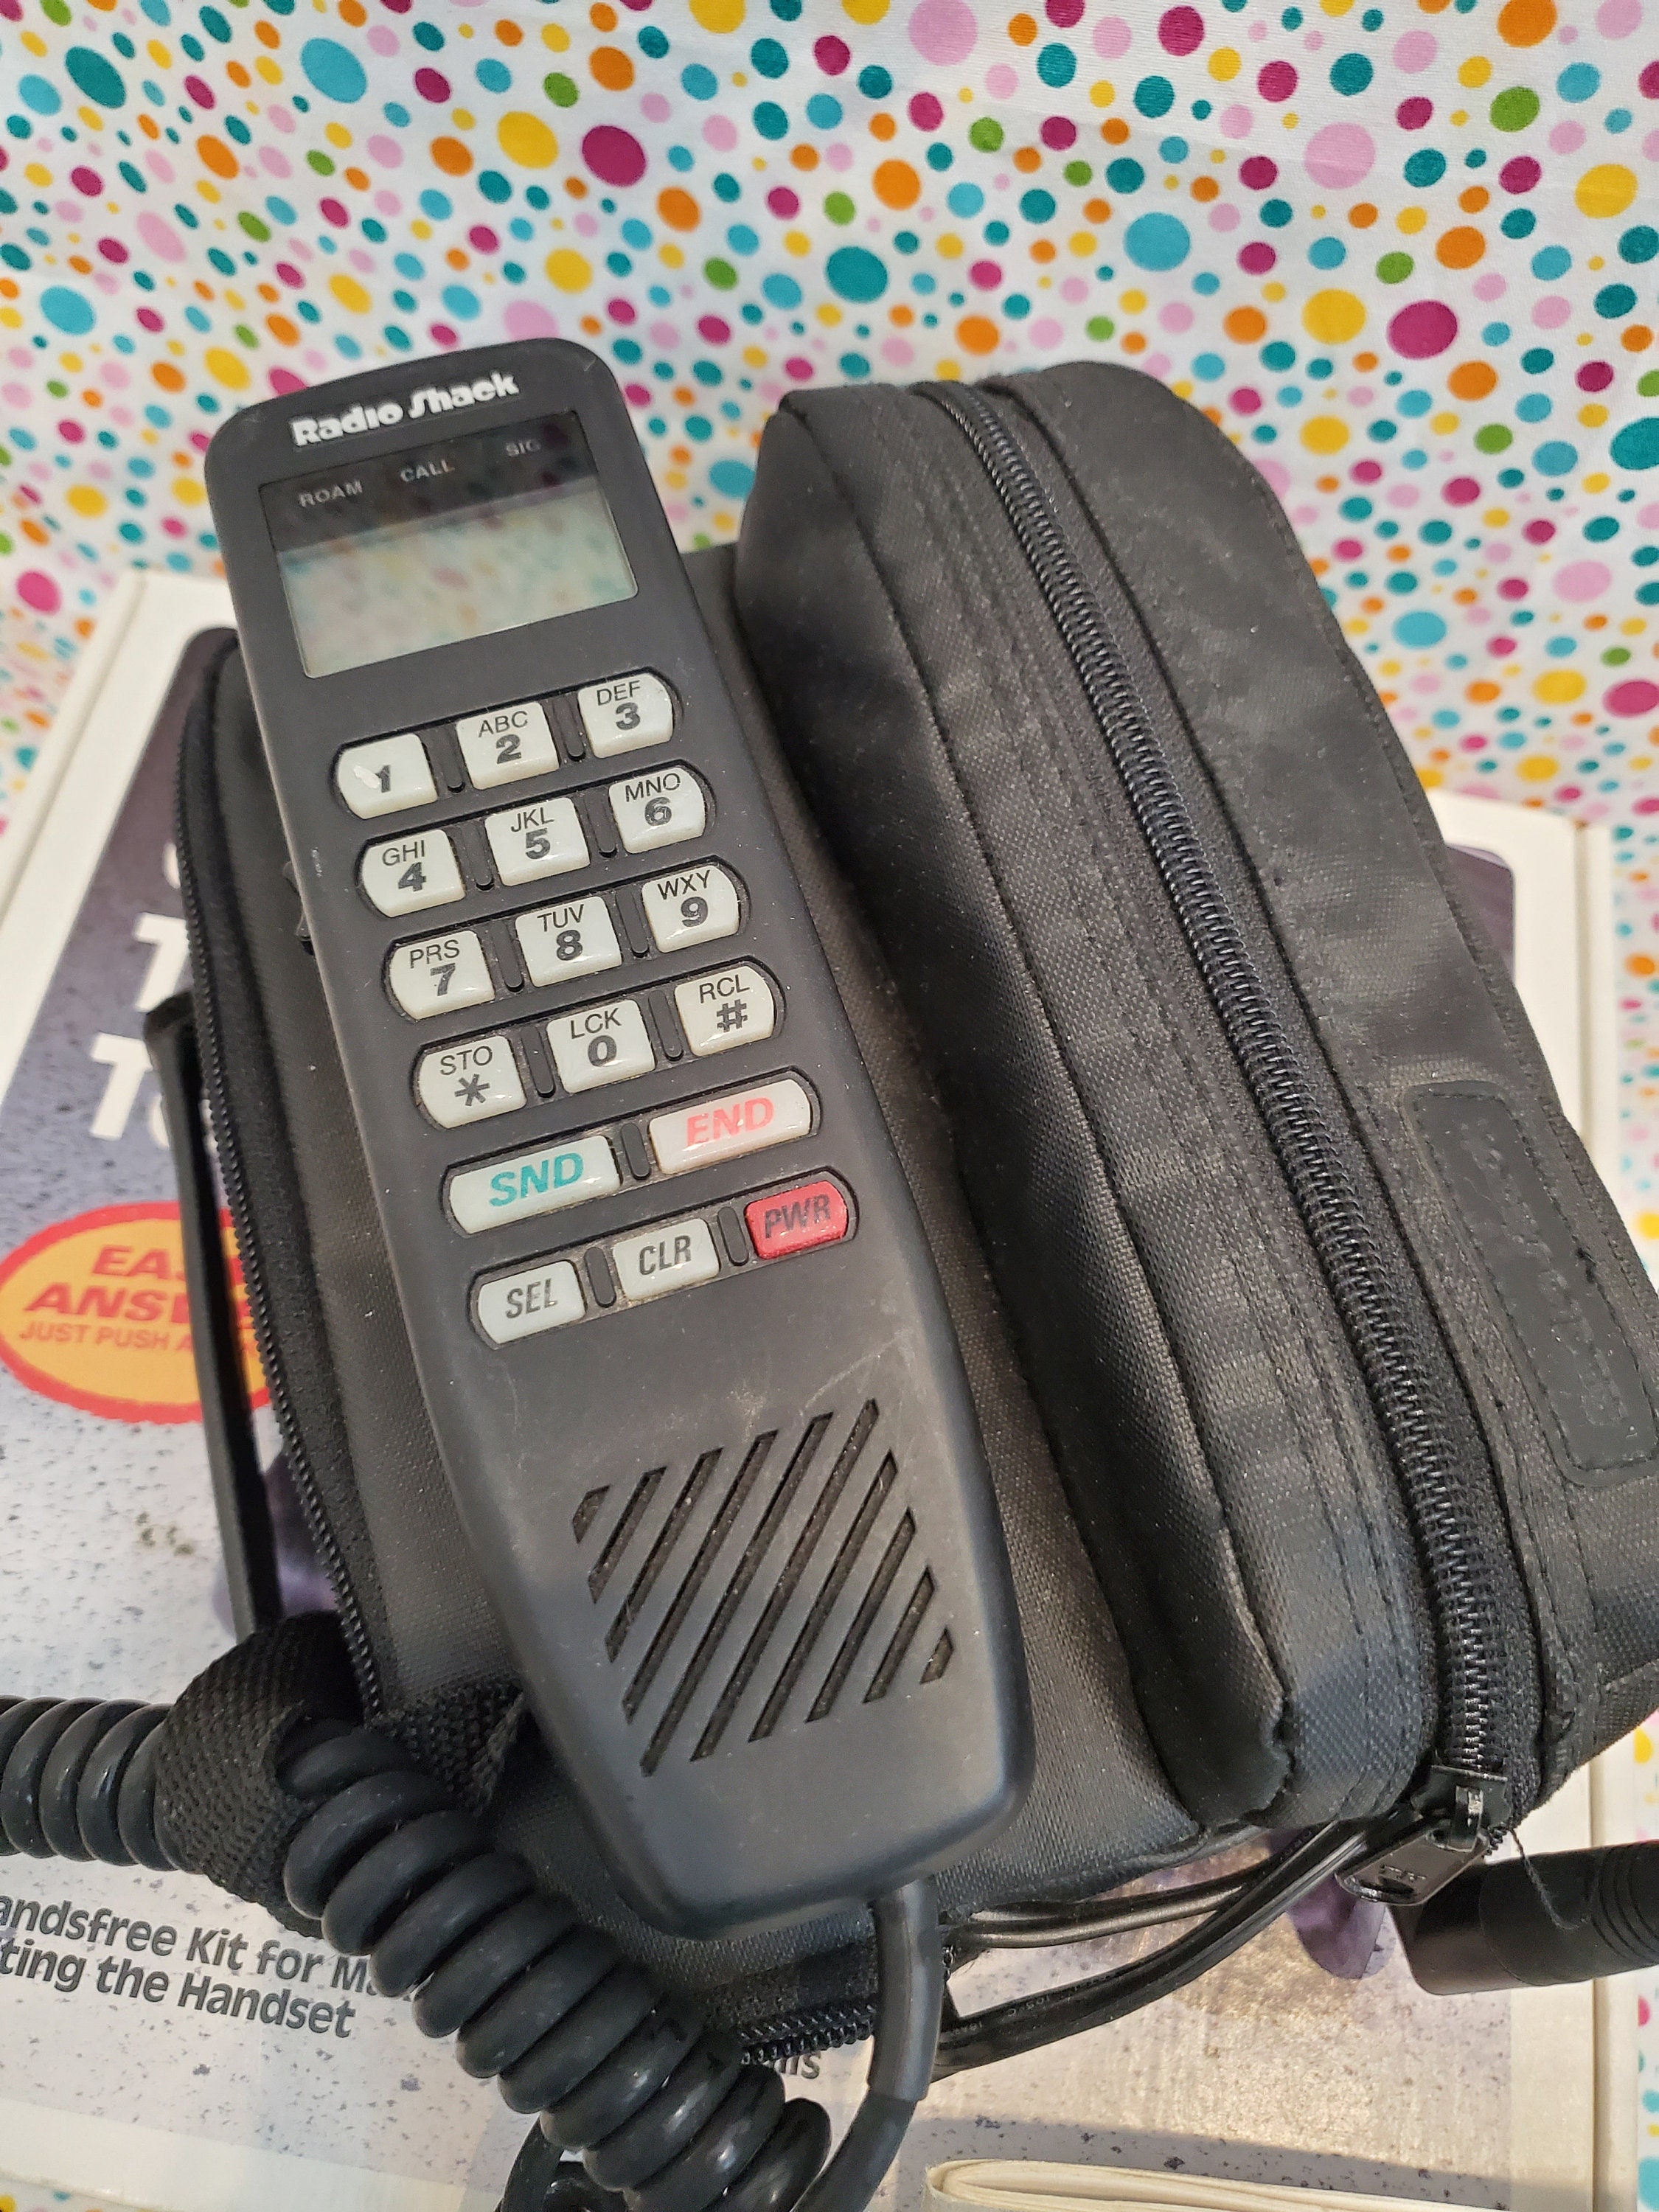 Radio Shack CT-1055 Bag Phone Car Cell Phone Powers Up